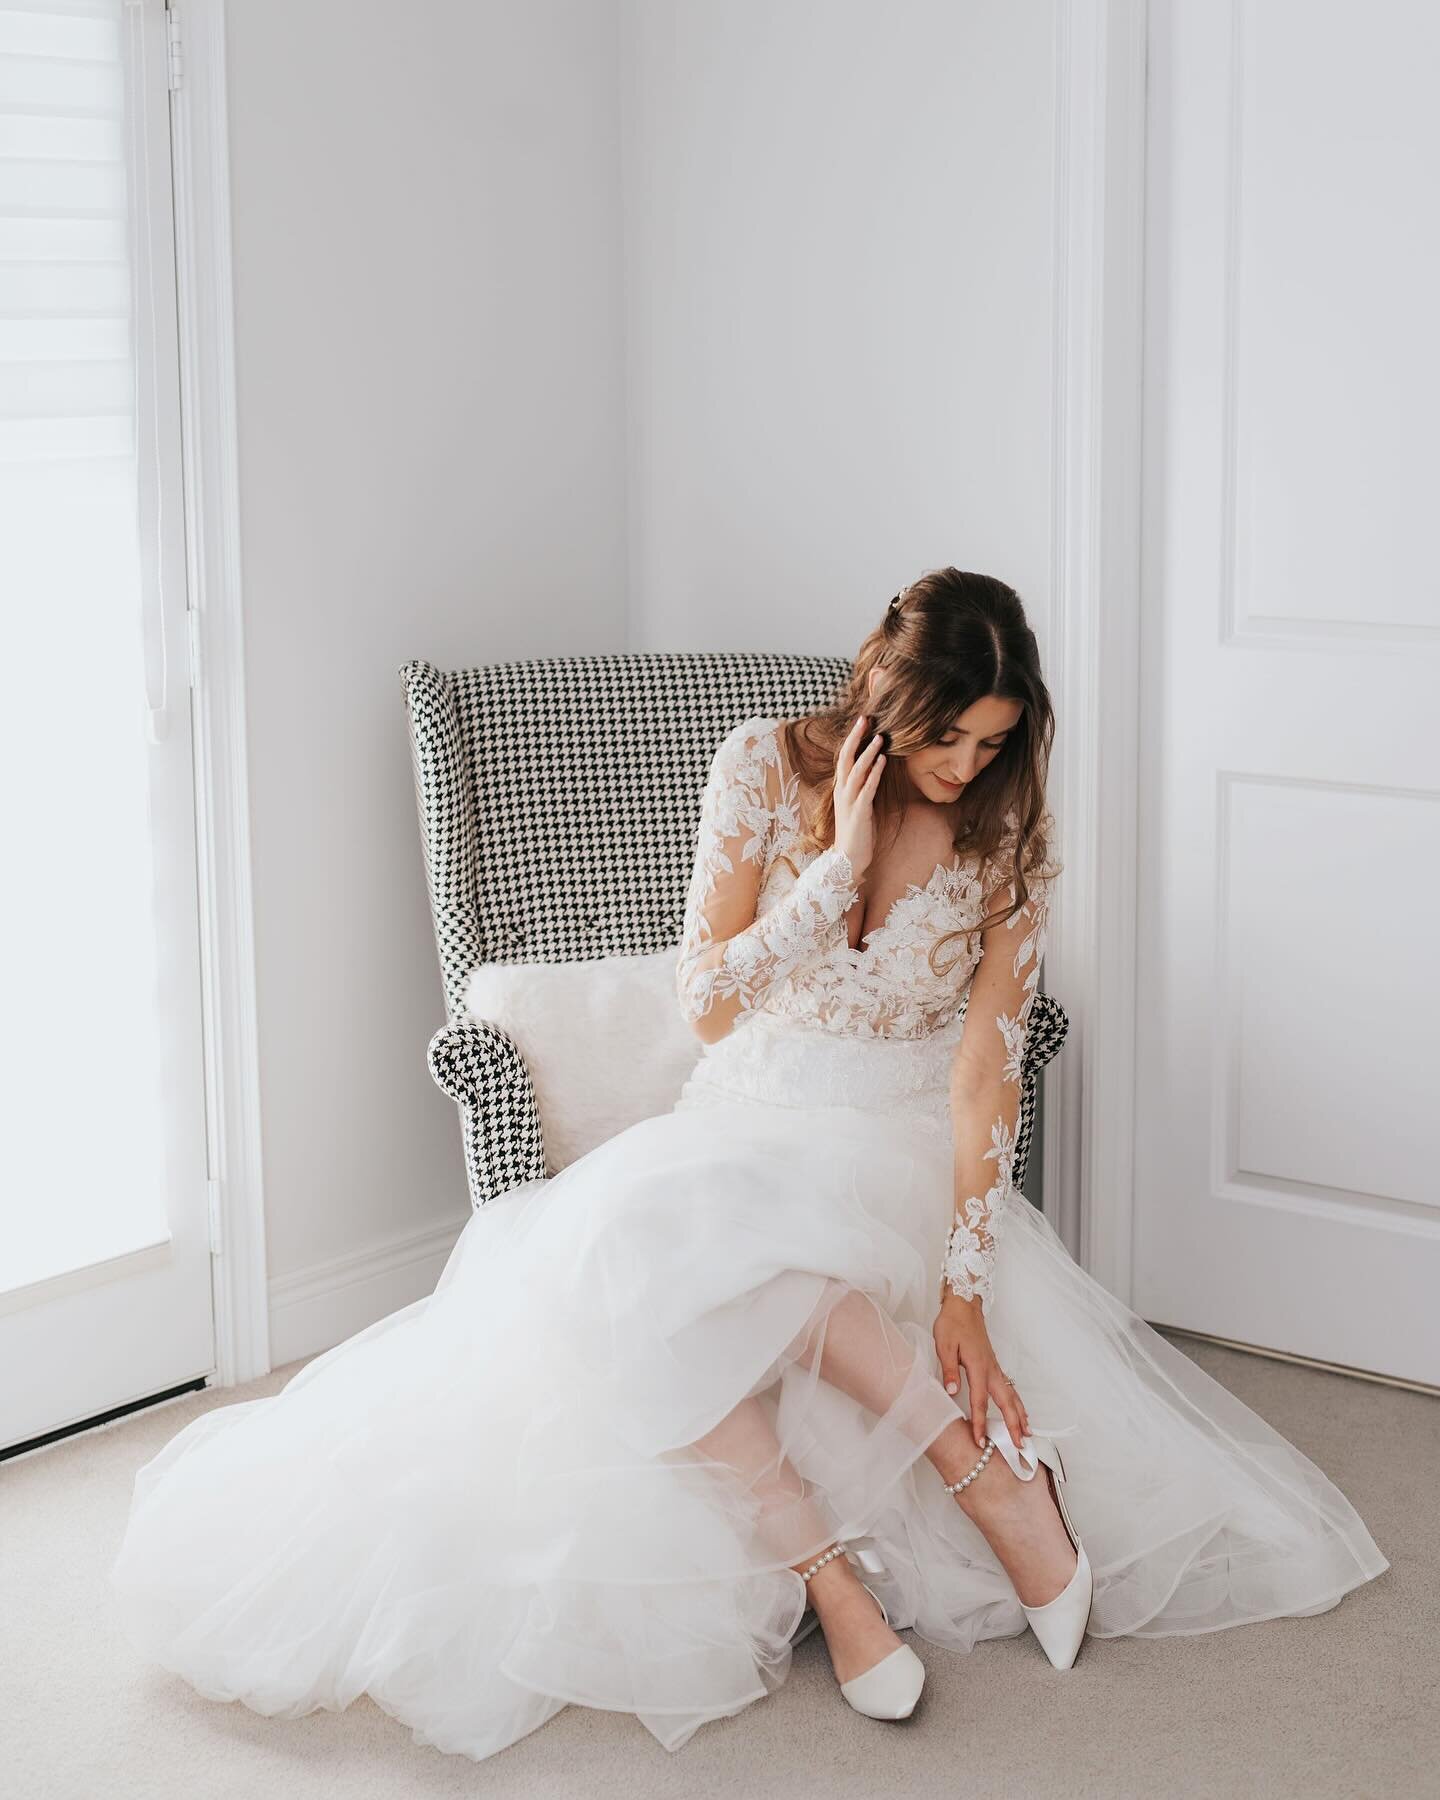 Beautiful Klaudia getting ready to marry her love 😍✨
.
.
#bridal #bridetobe #torontoweddingphotographer #torontobrides #beautifulbride #torontoweddings #bridaldetails #torontophotographer